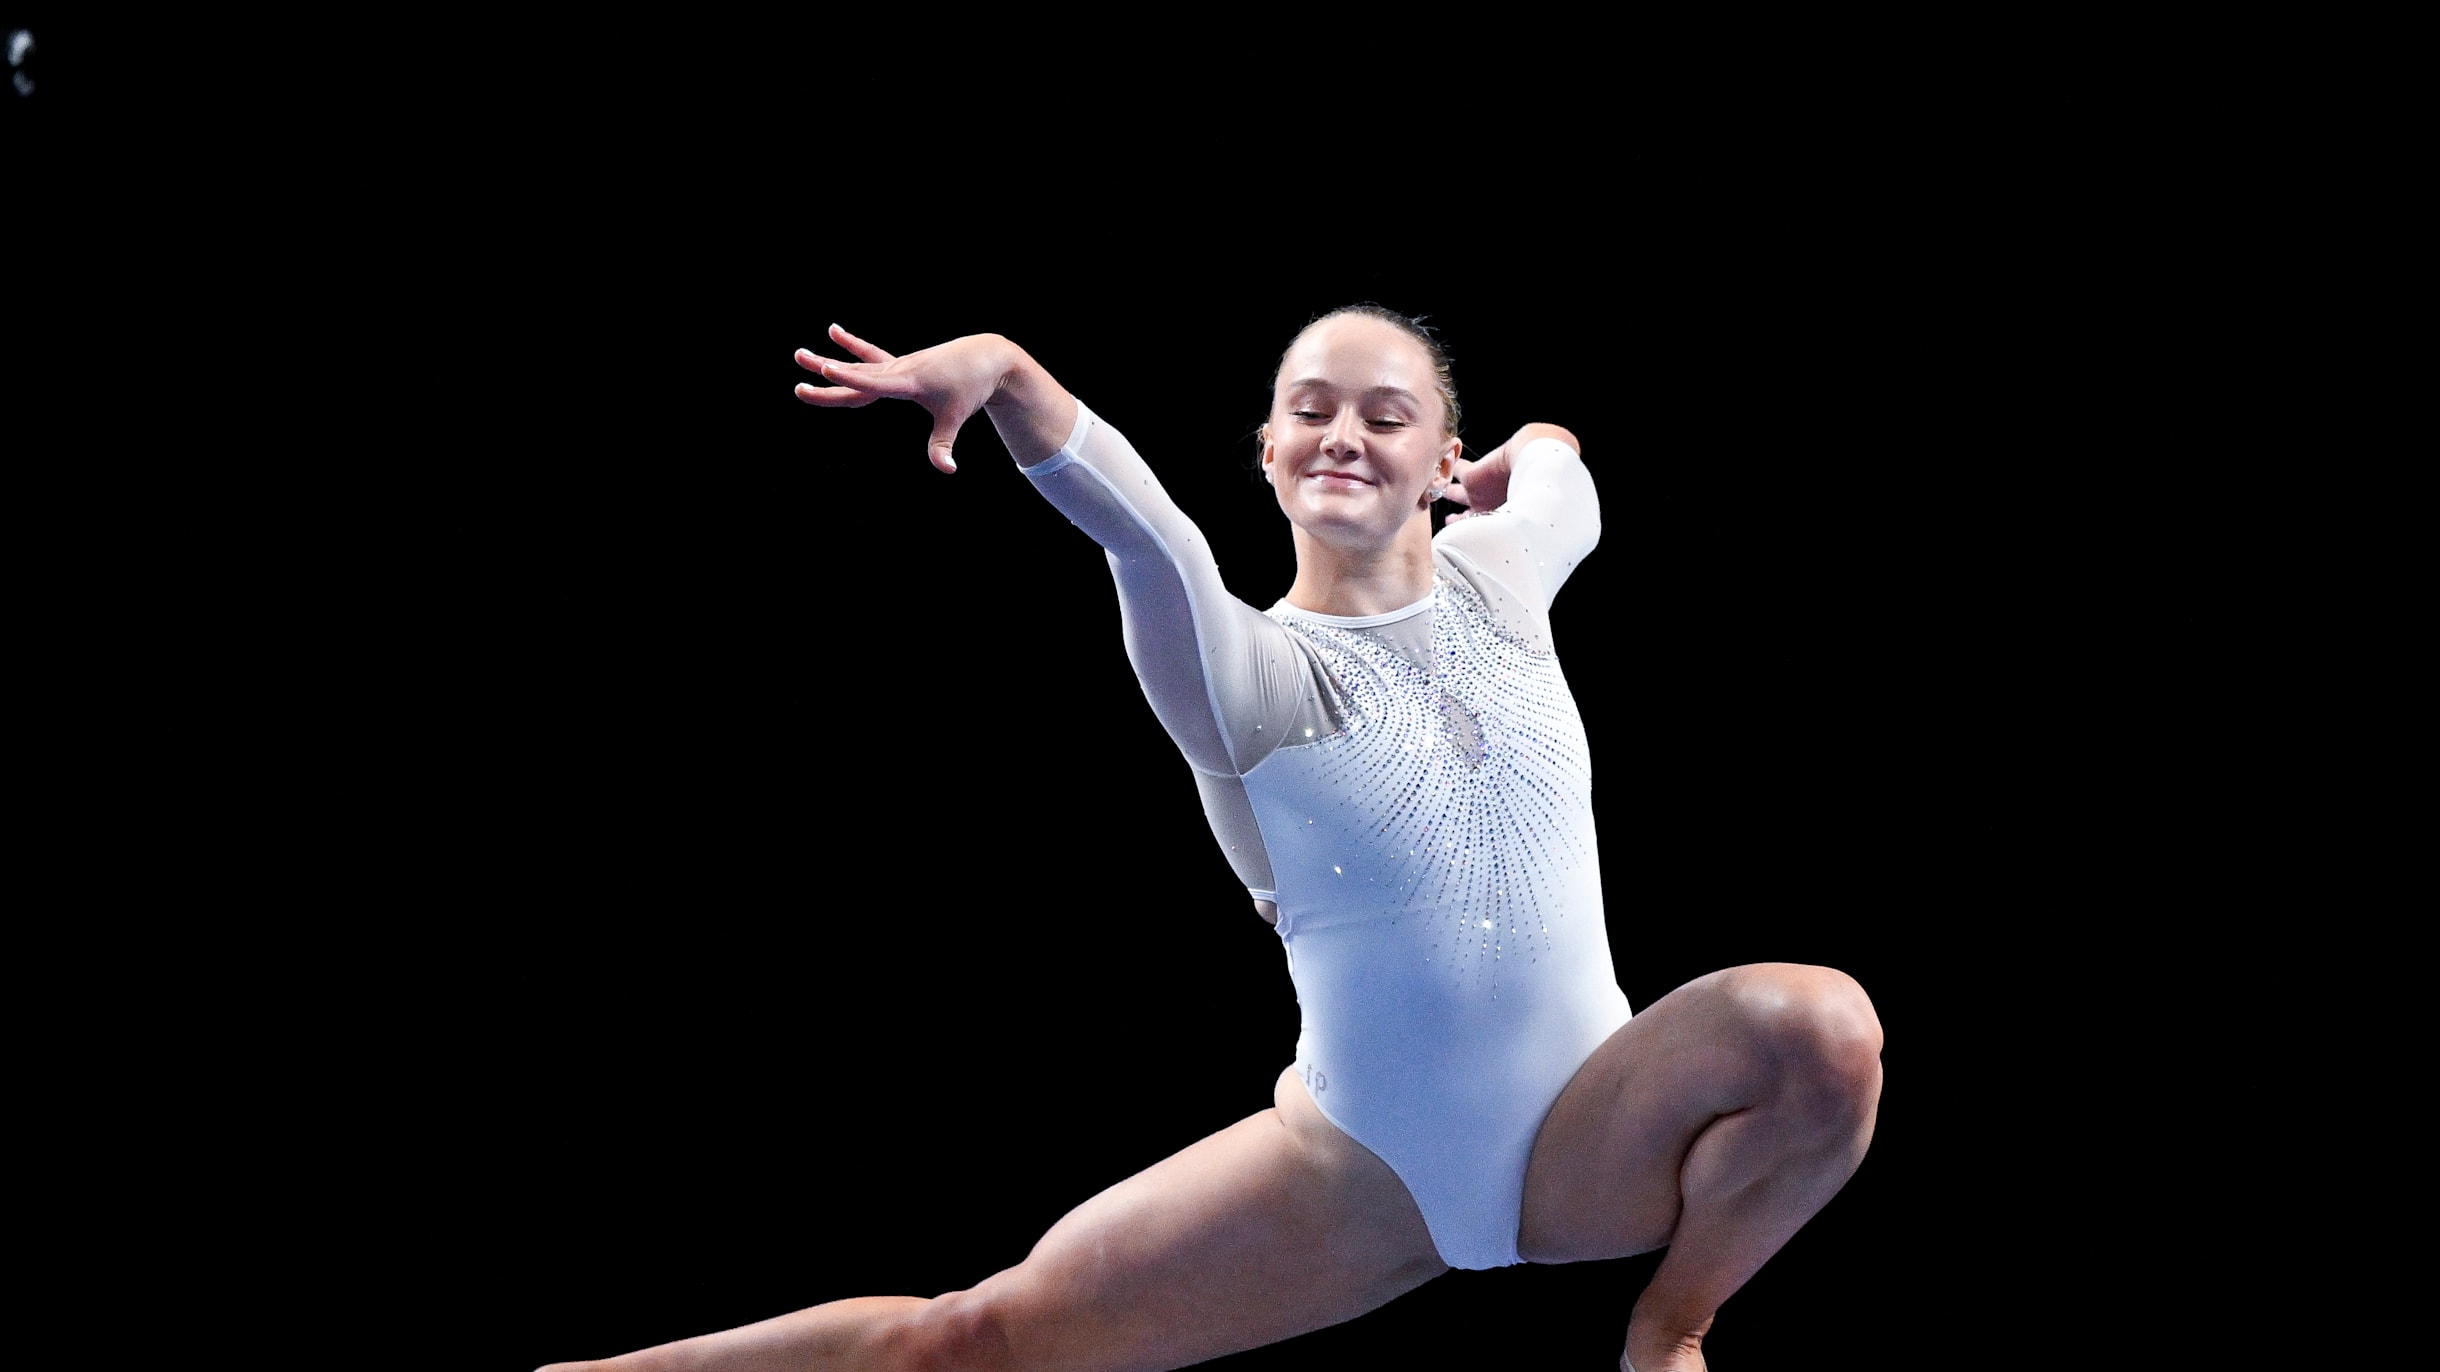 Riley McCusker - Gymnastics - Florida Gators